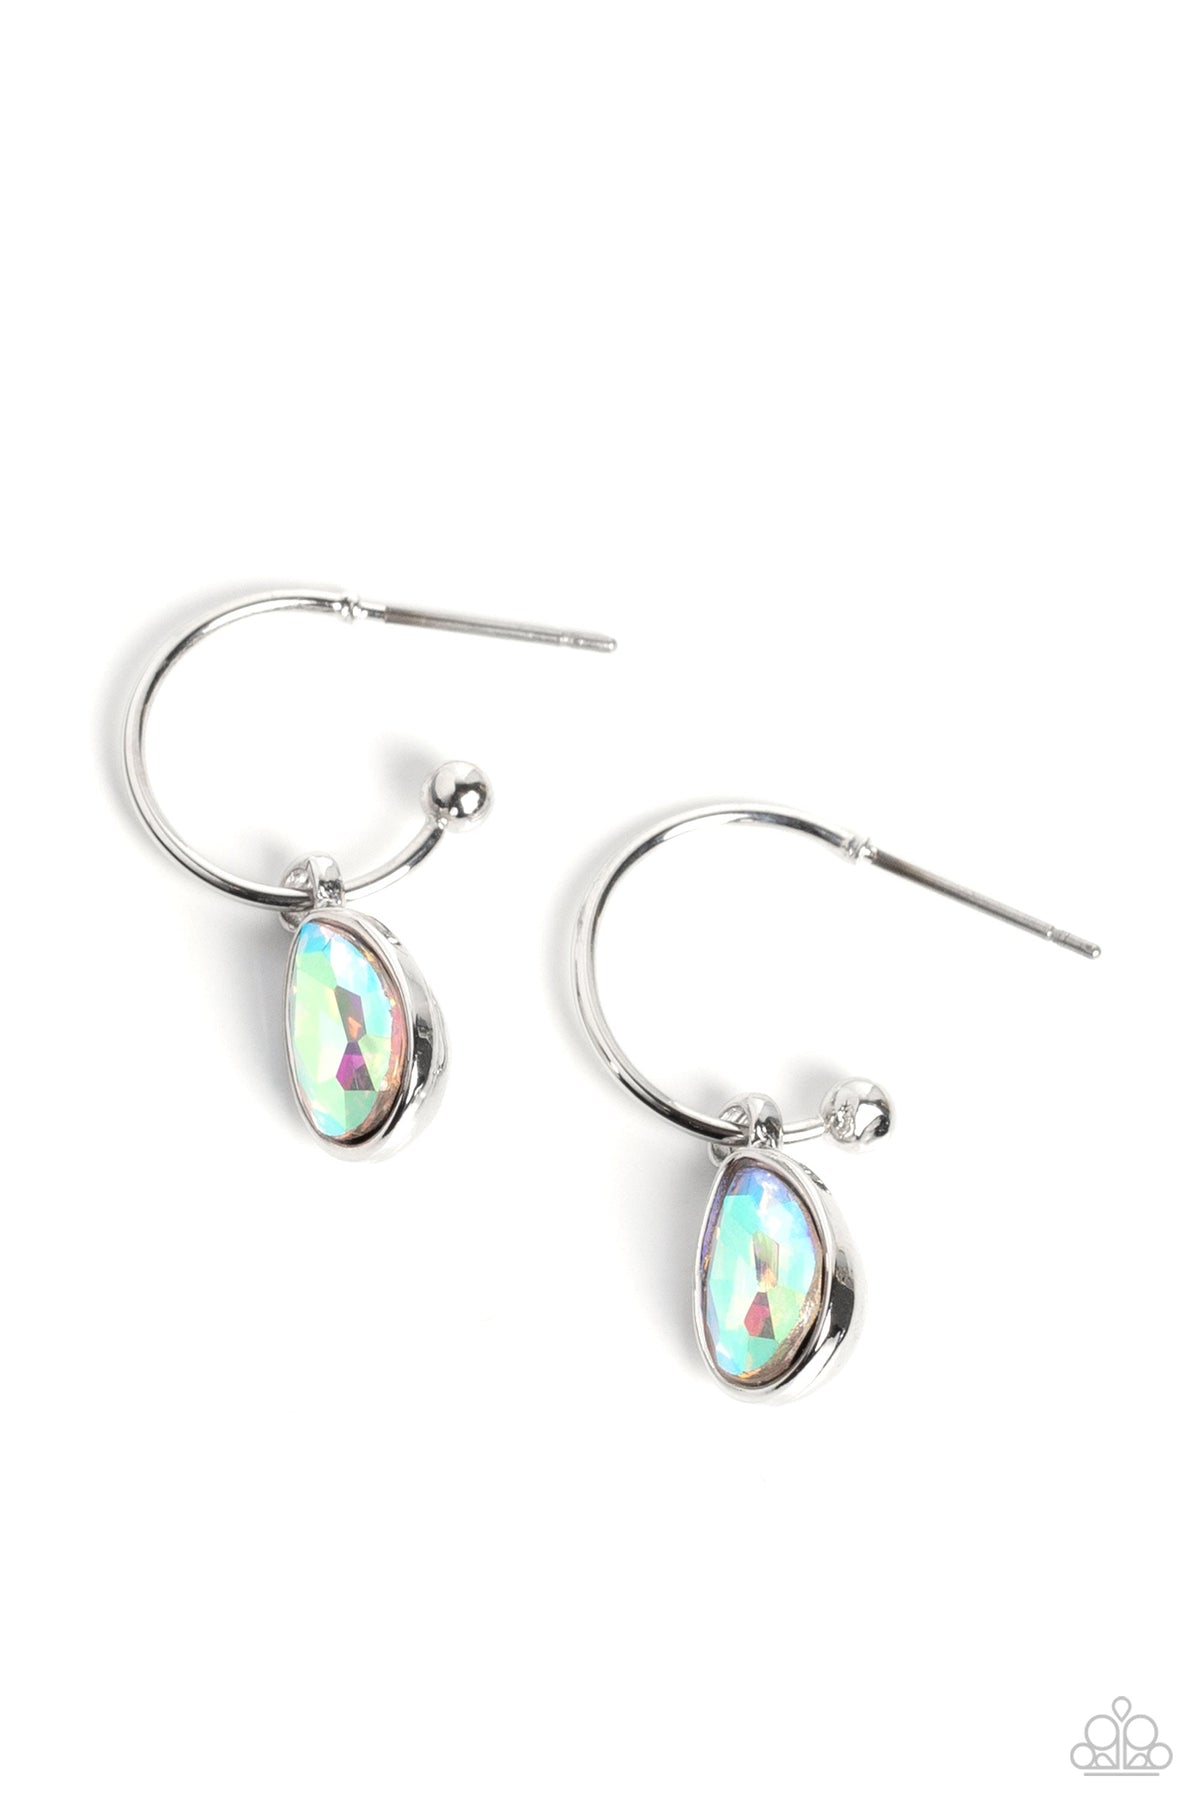 Teardrop Tassel Multi Iridescent Mini Hoop Earrings - Paparazzi Accessories- lightbox - CarasShop.com - $5 Jewelry by Cara Jewels